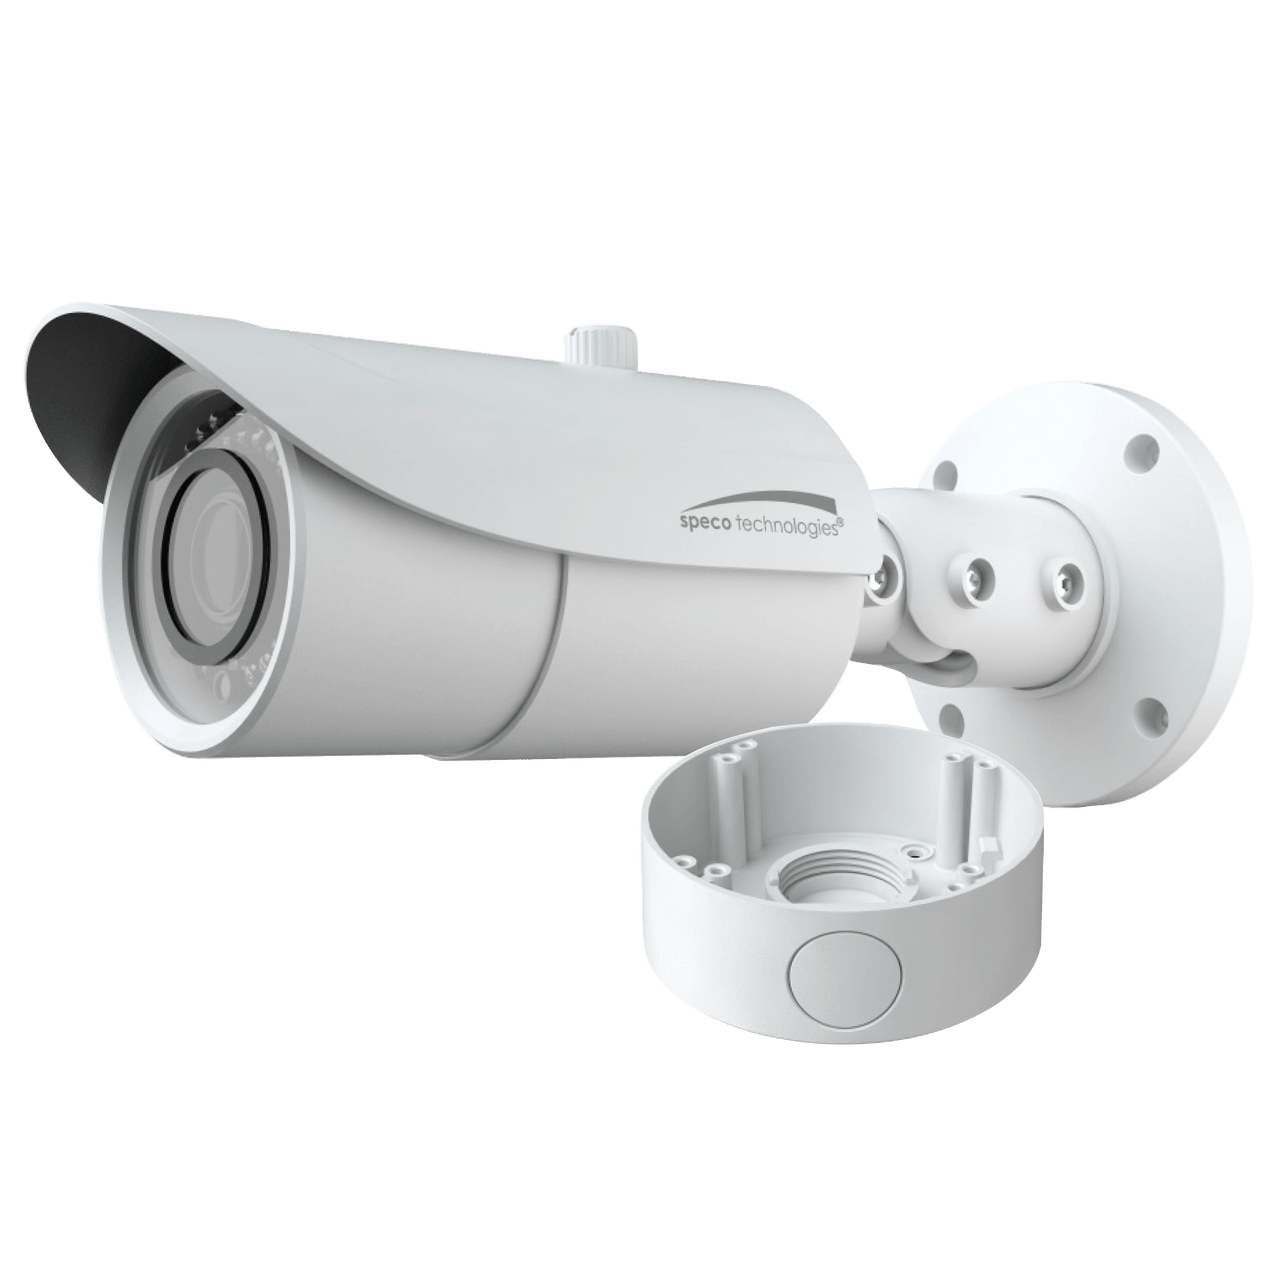 Speco Technologies VLBT6W 2MP HD-TVI Bullet Camera, IR, 2.8-12mm Lens, Included Junc Box, White Housing (VLBT6W)